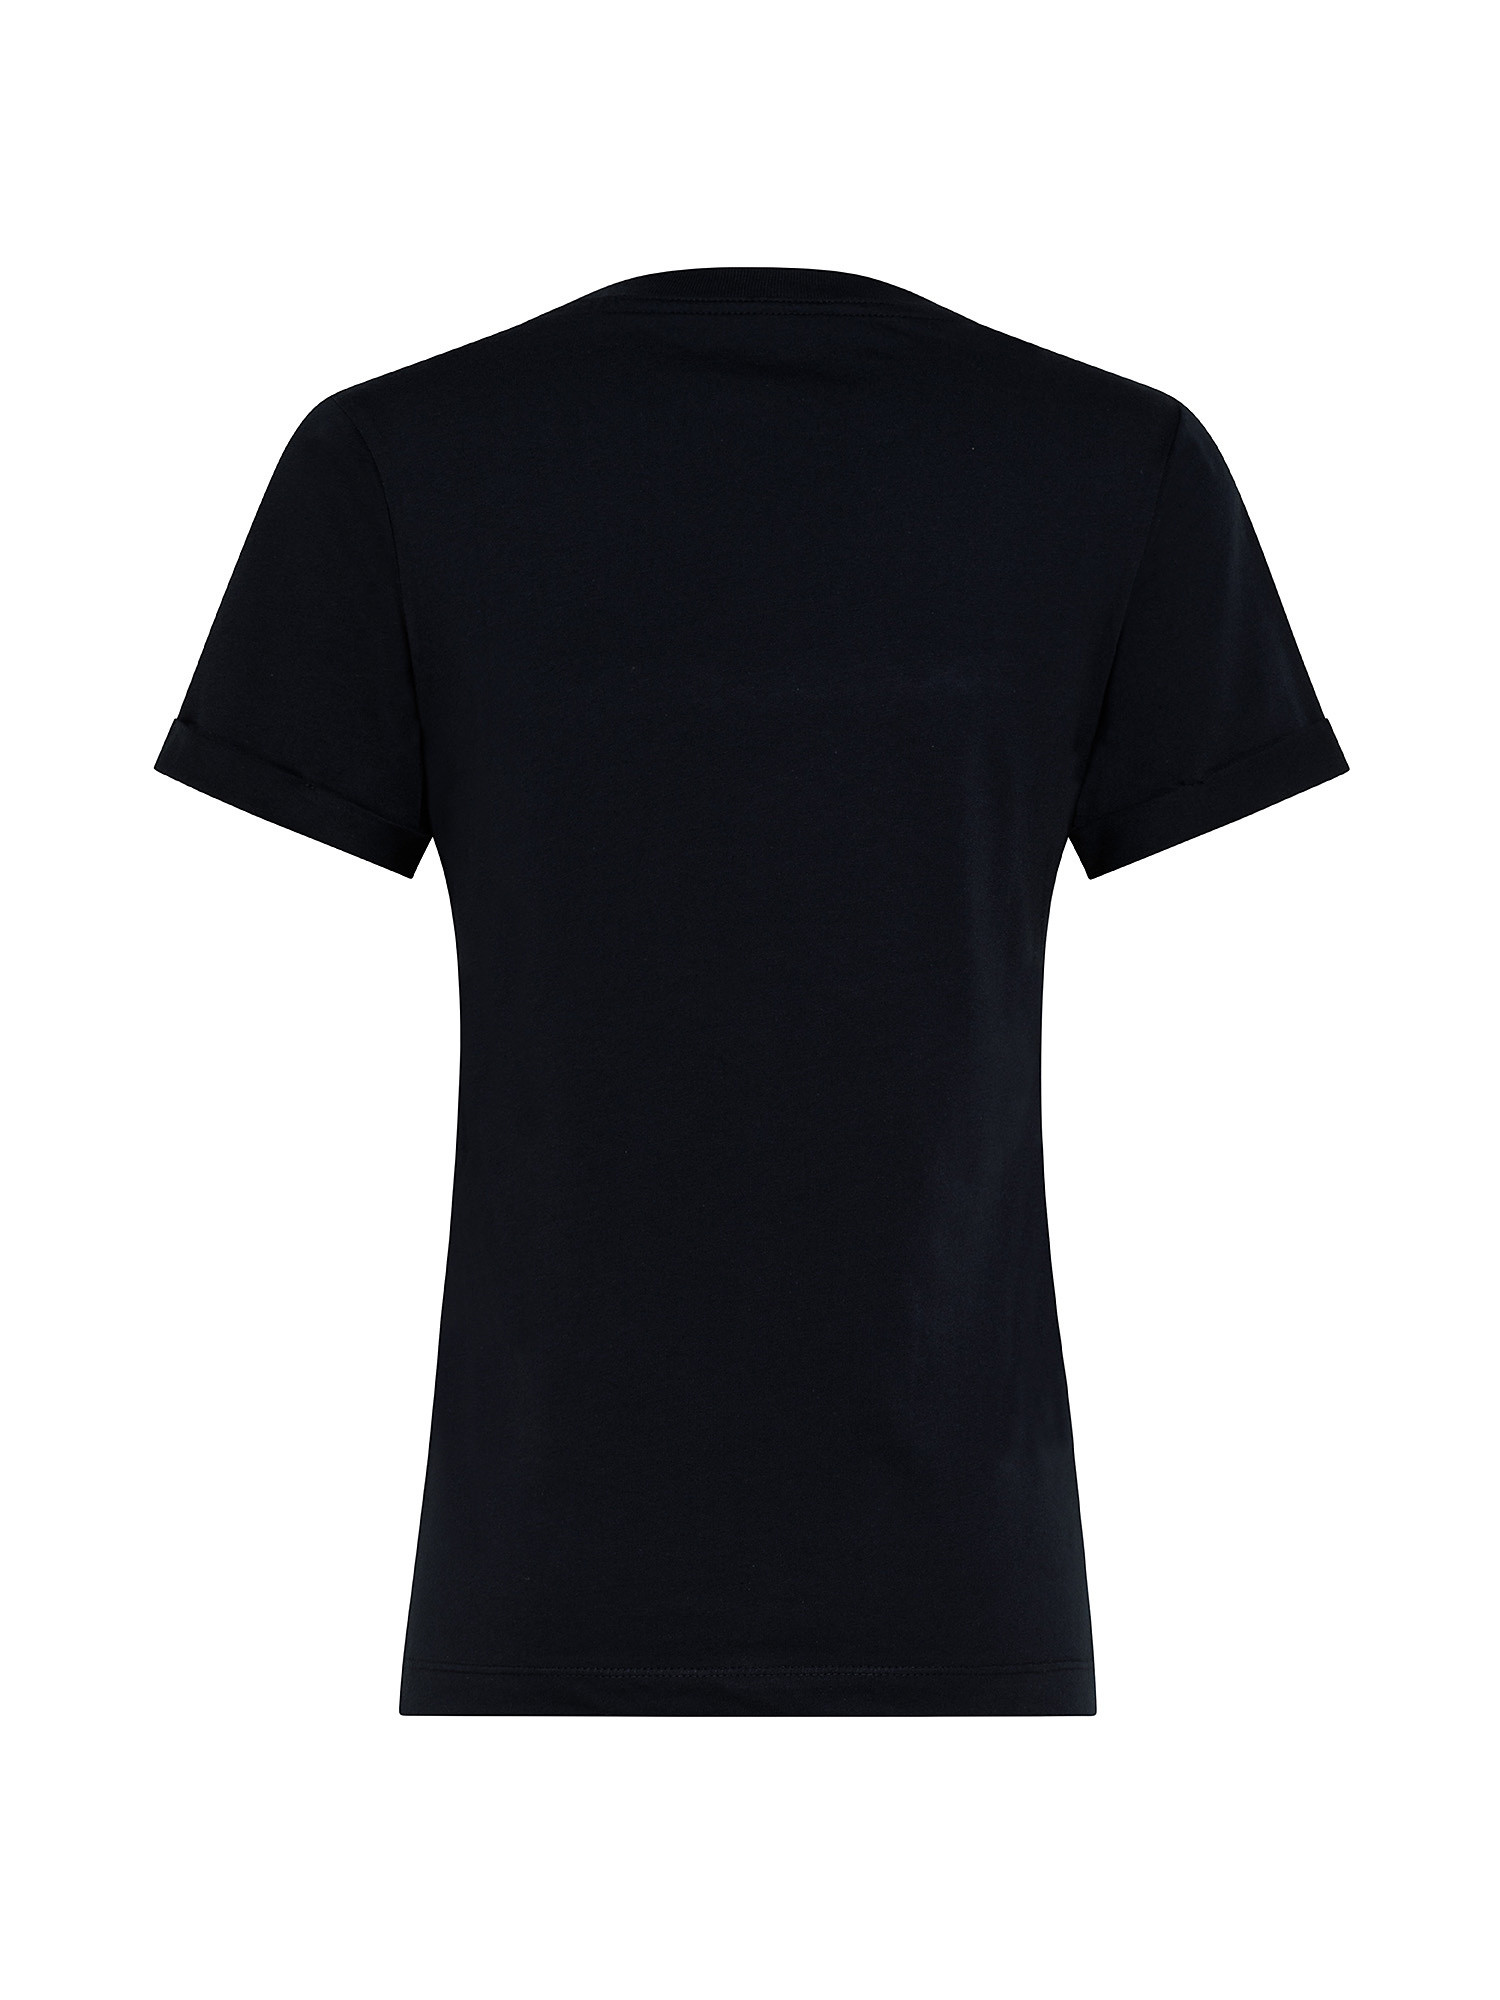 T-shirt con stampa a fiori Pauline, Blu scuro, large image number 1